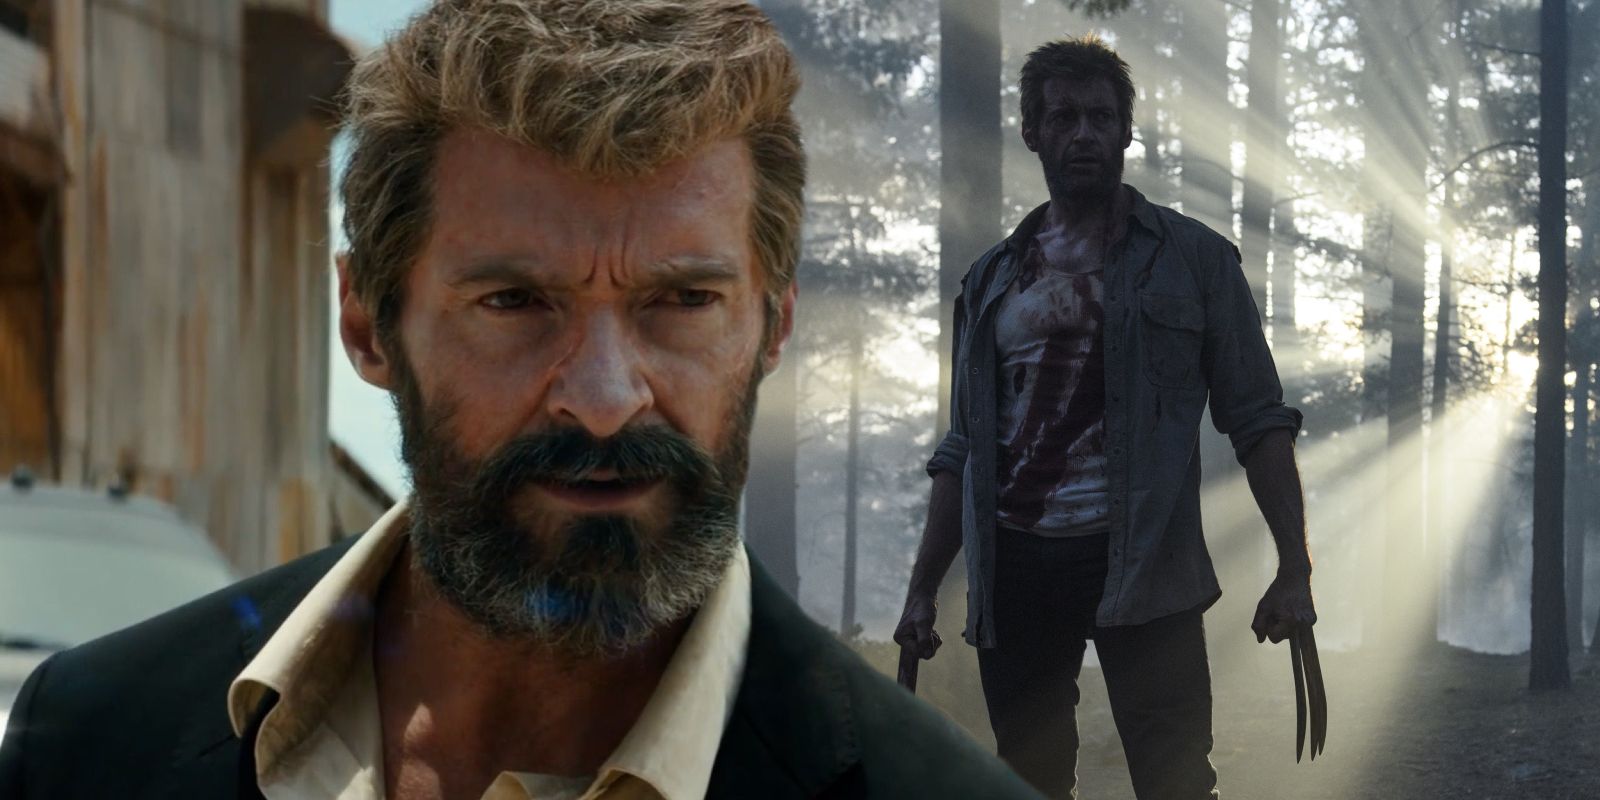 Hugh Jackman as Logan/Wolverine in Logan